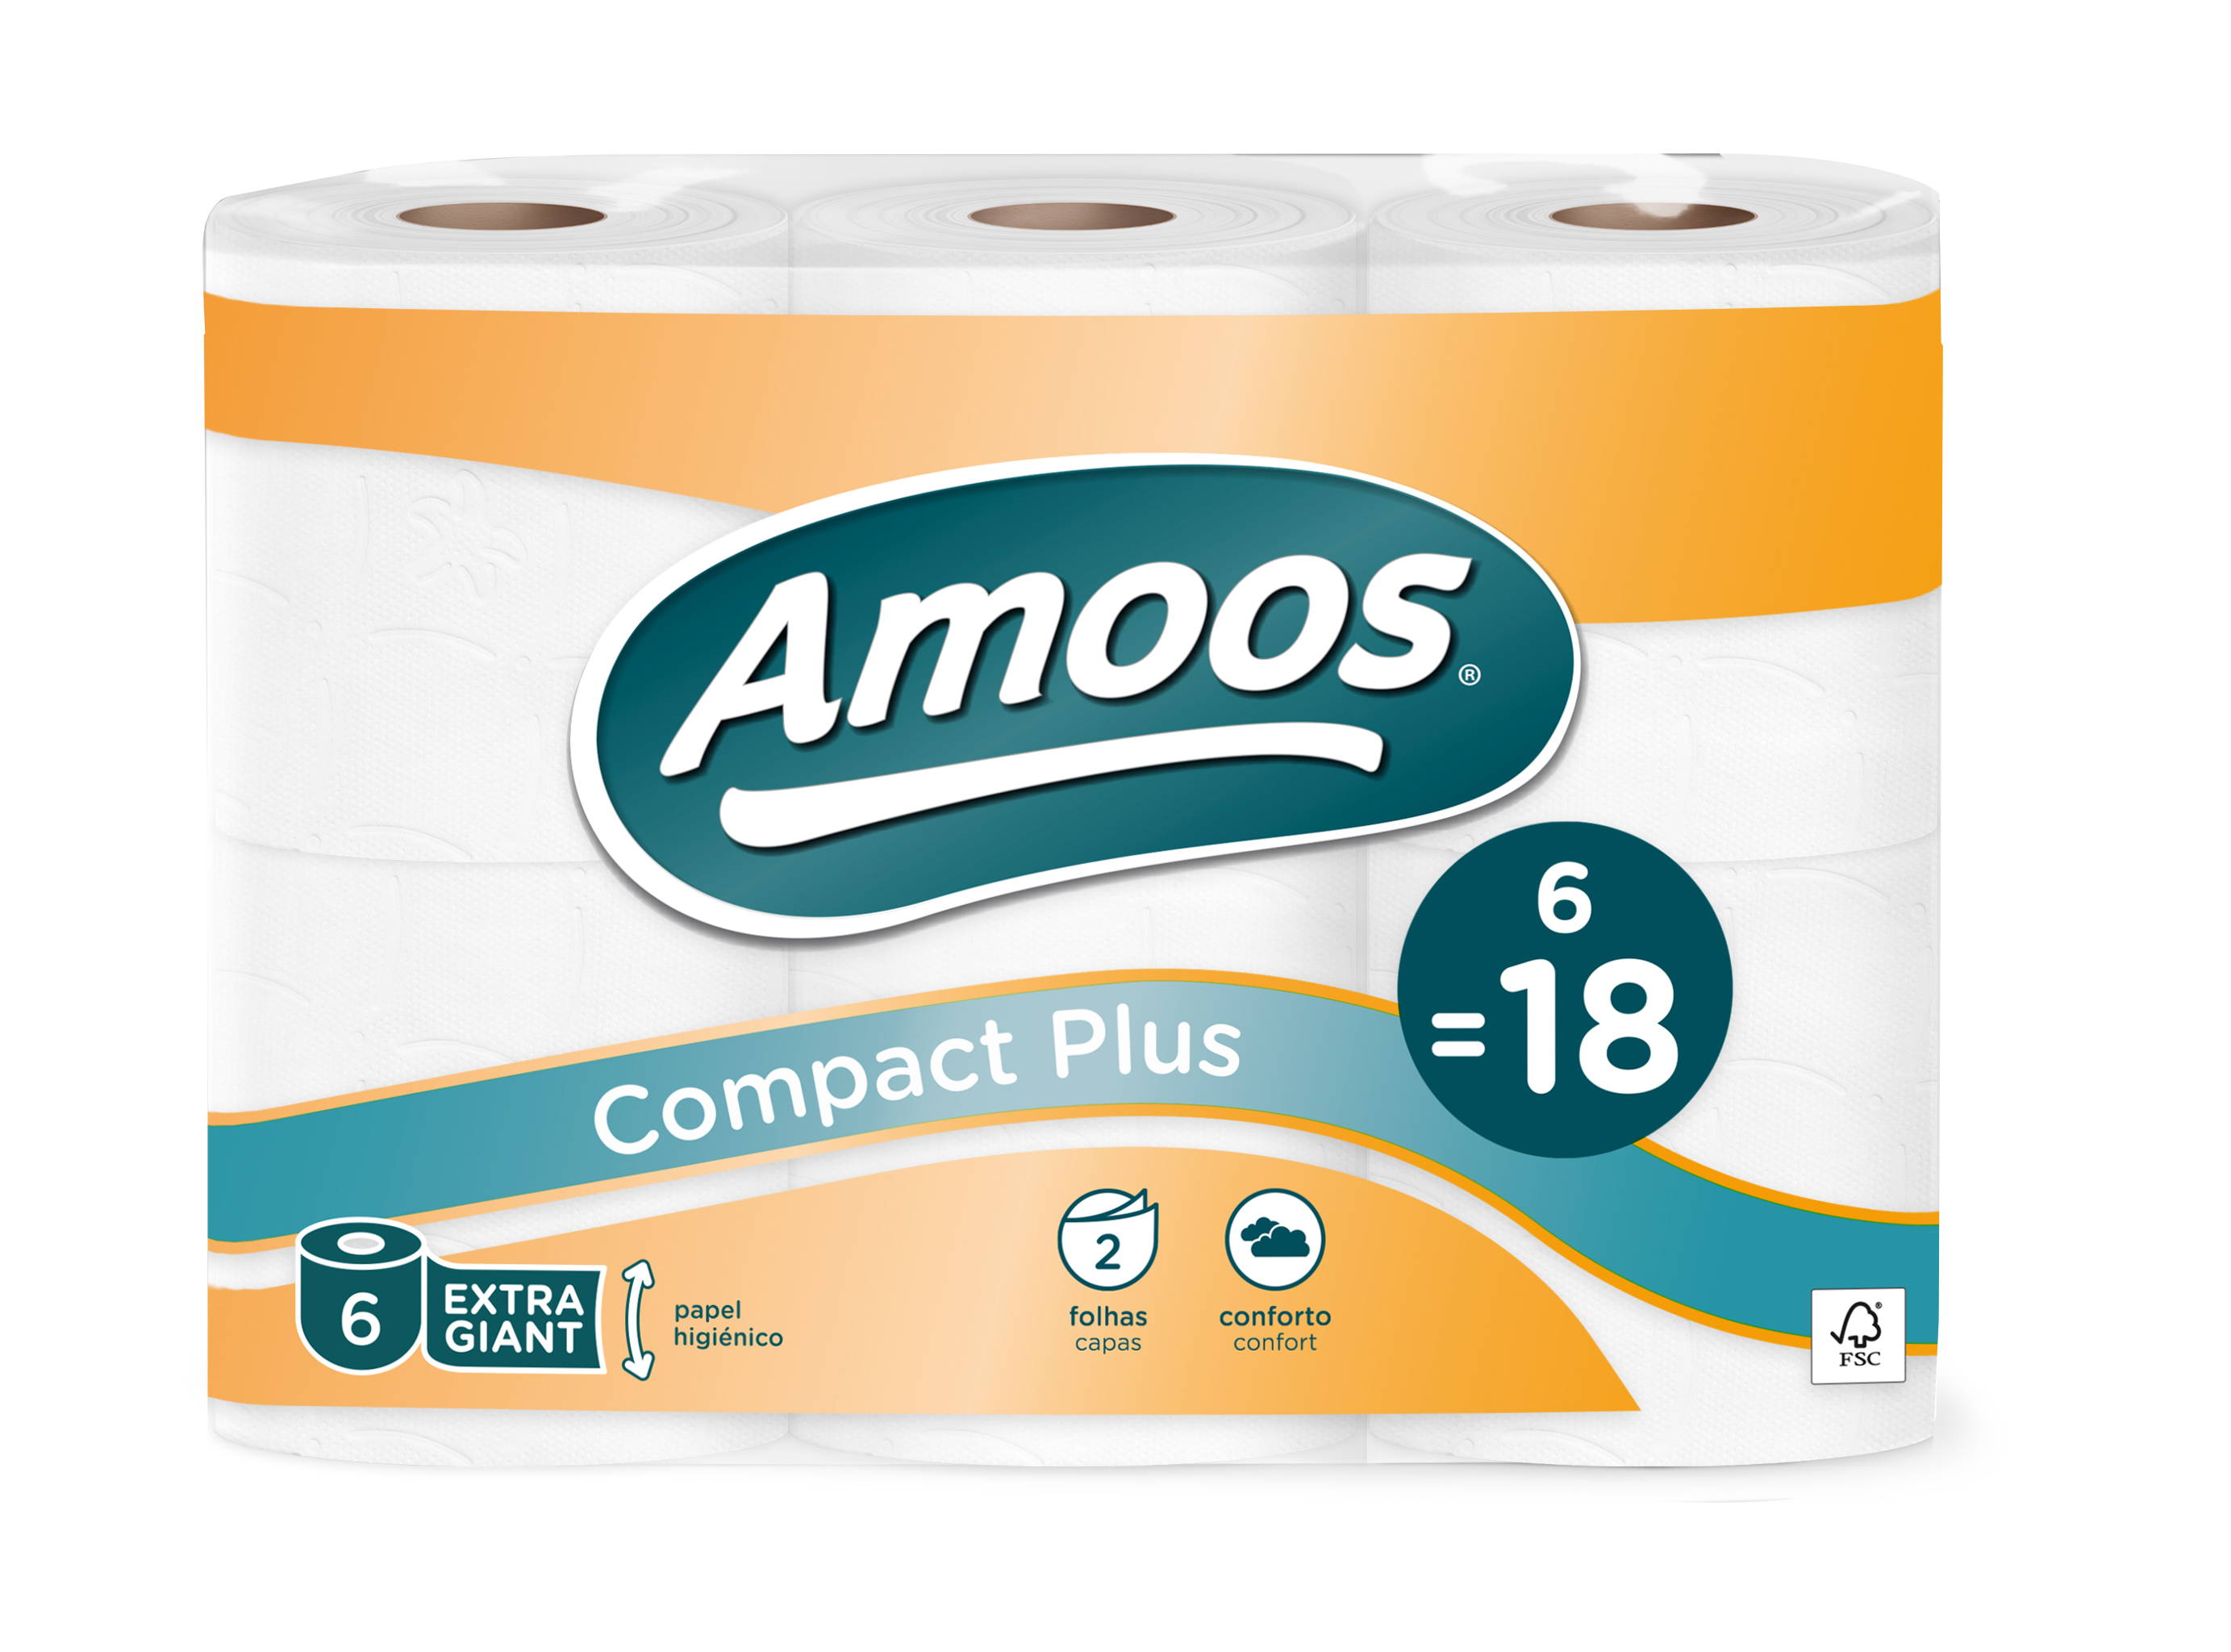 Tualetes papīrs Amoos Compact plus, T4, 2 slāņi, balta, 6 ruļļi/iep.